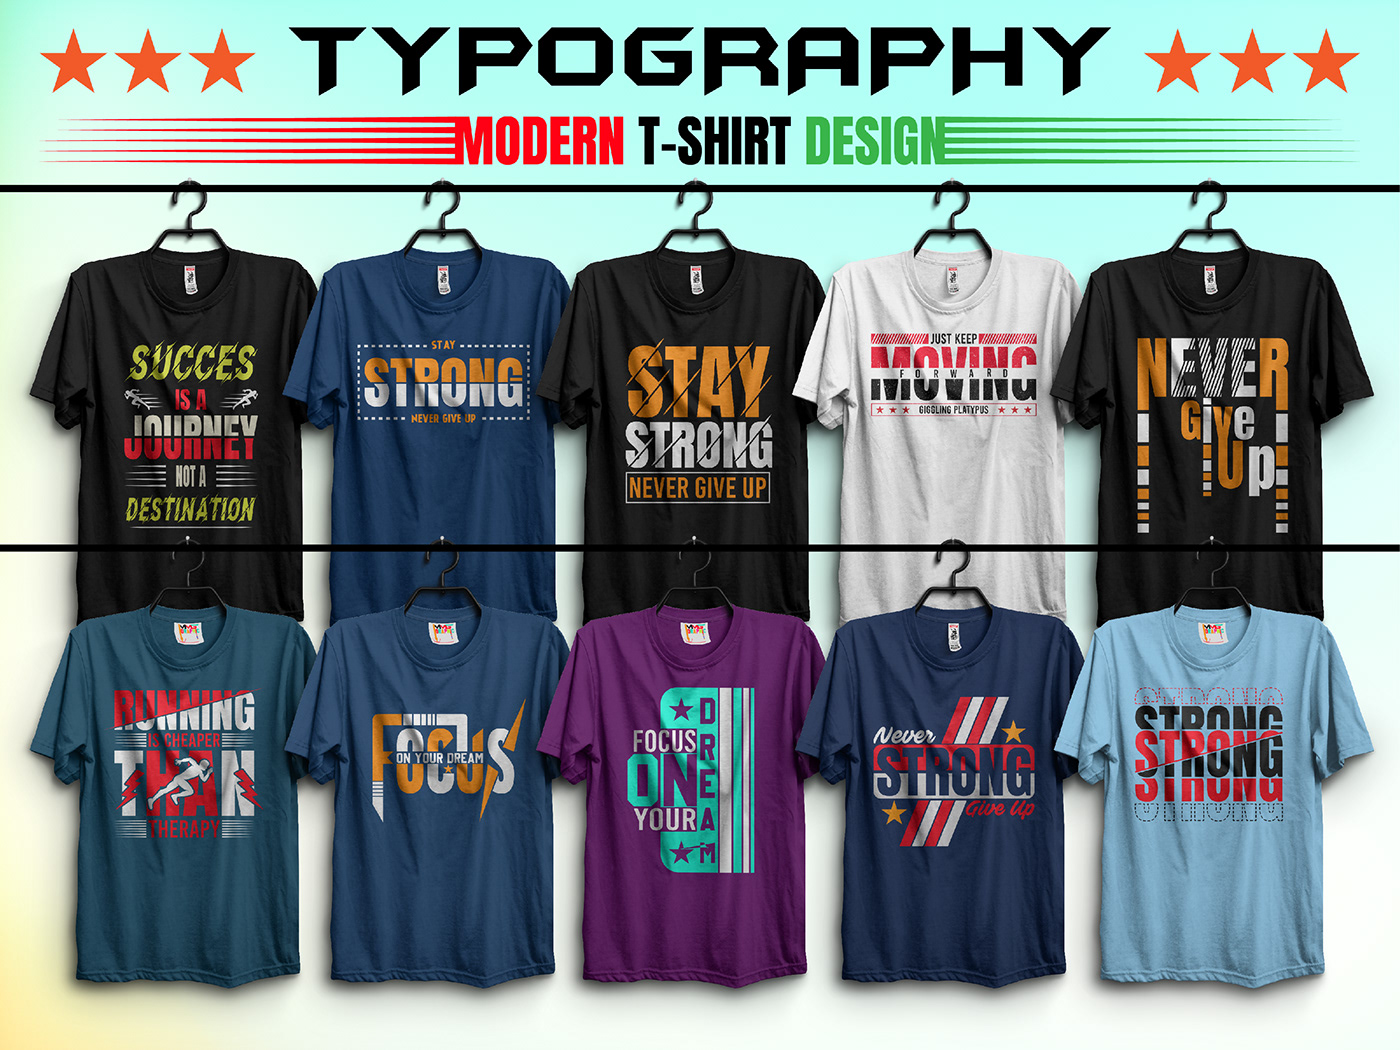 t-shirt T-Shirt Design Typography t-shirt design motivational t-shirt typography design modern t-shirt Modern T-shirt Design Typography T-shirt Modern Design custom t-shirt design